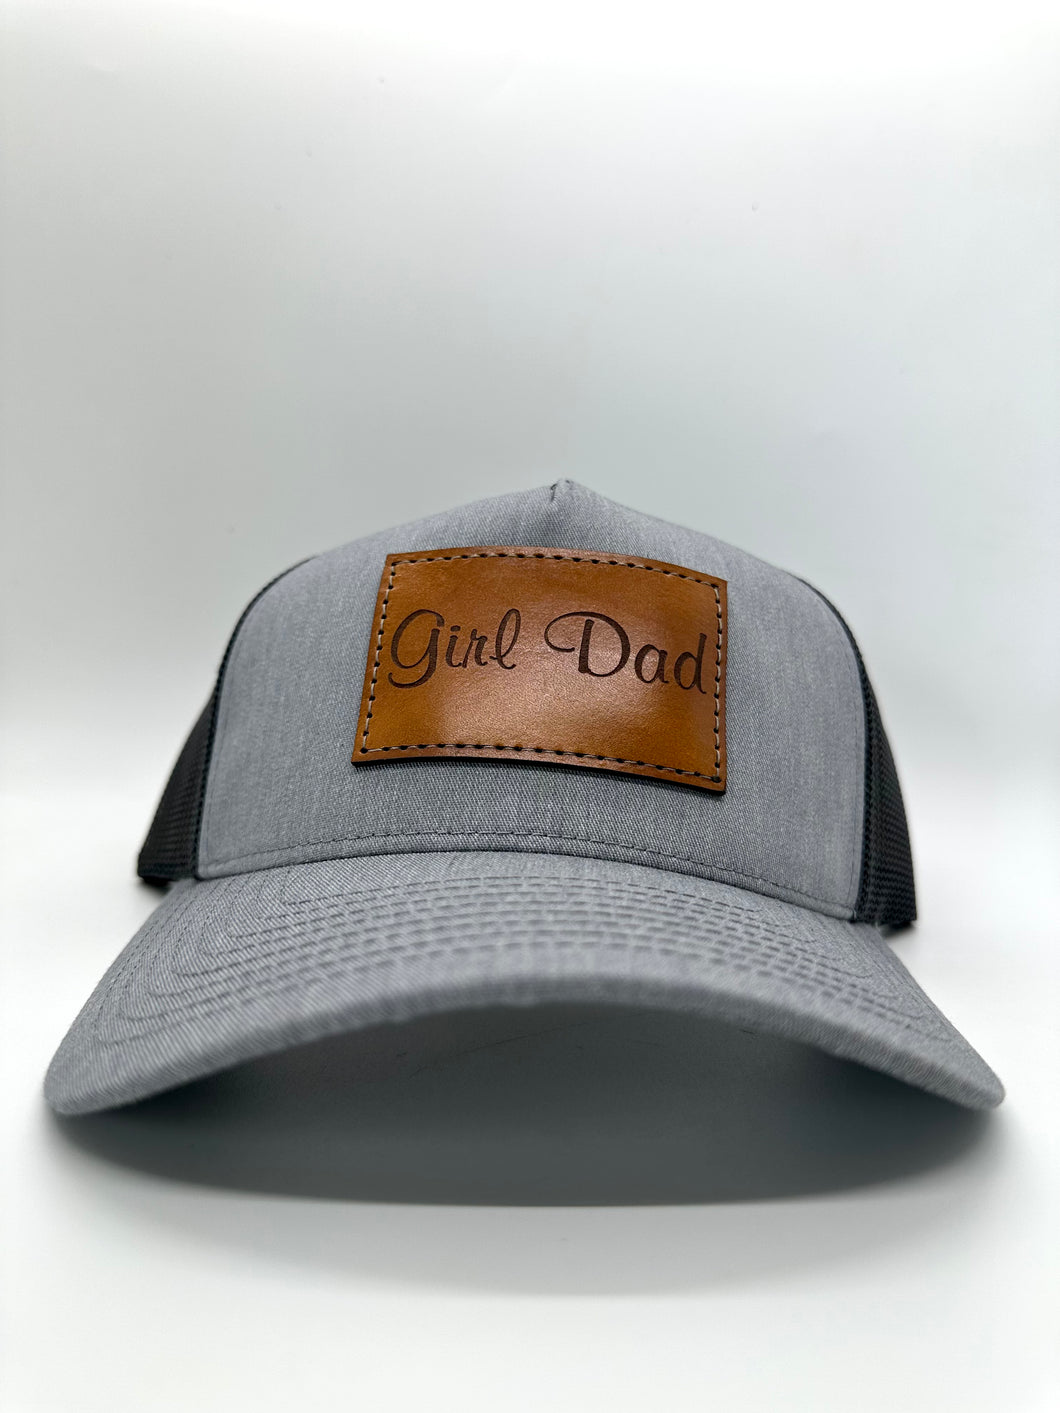 Girl Dad Hat